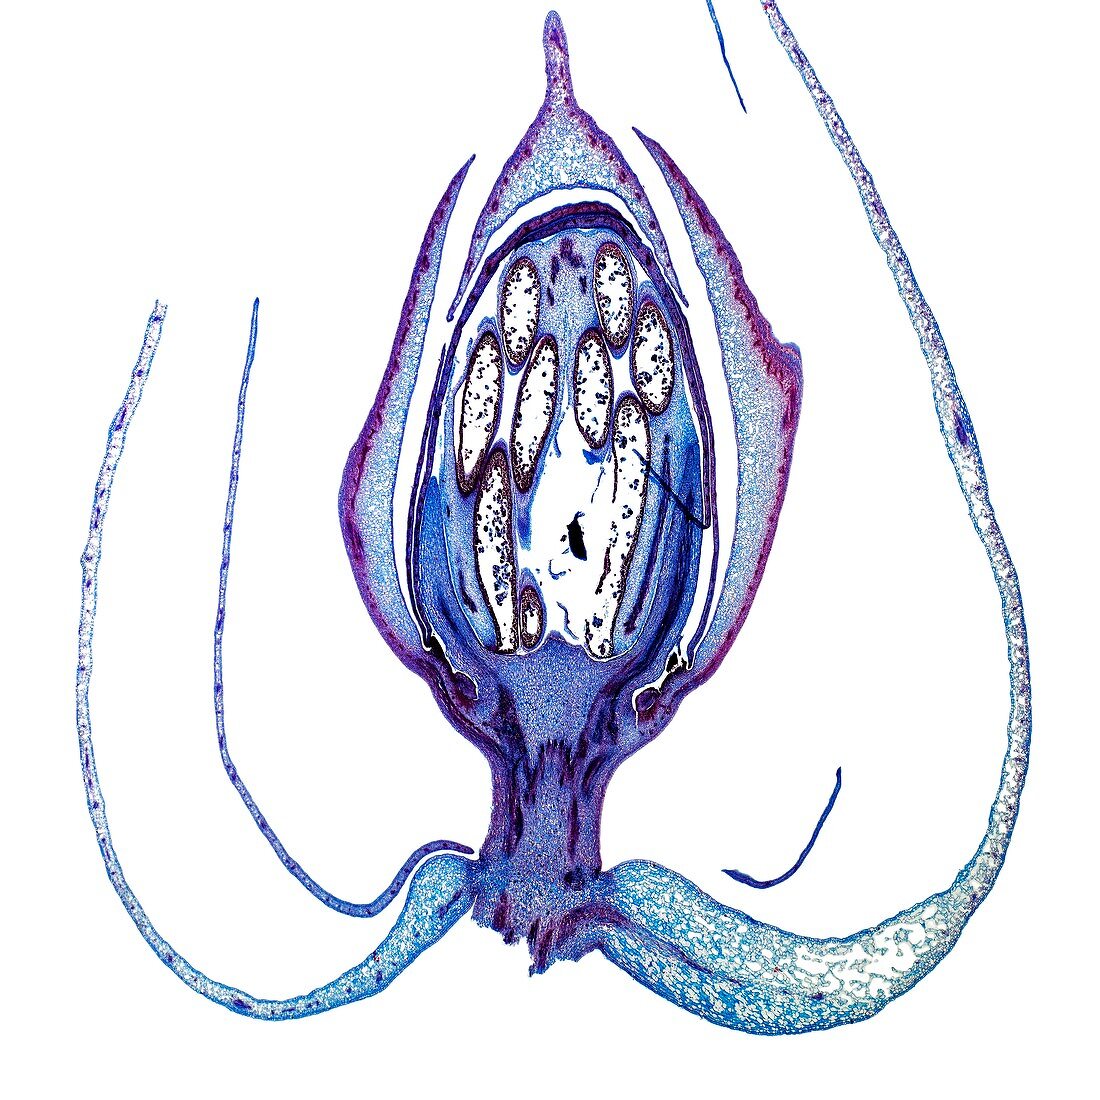 Passion flower bud,light micrograph